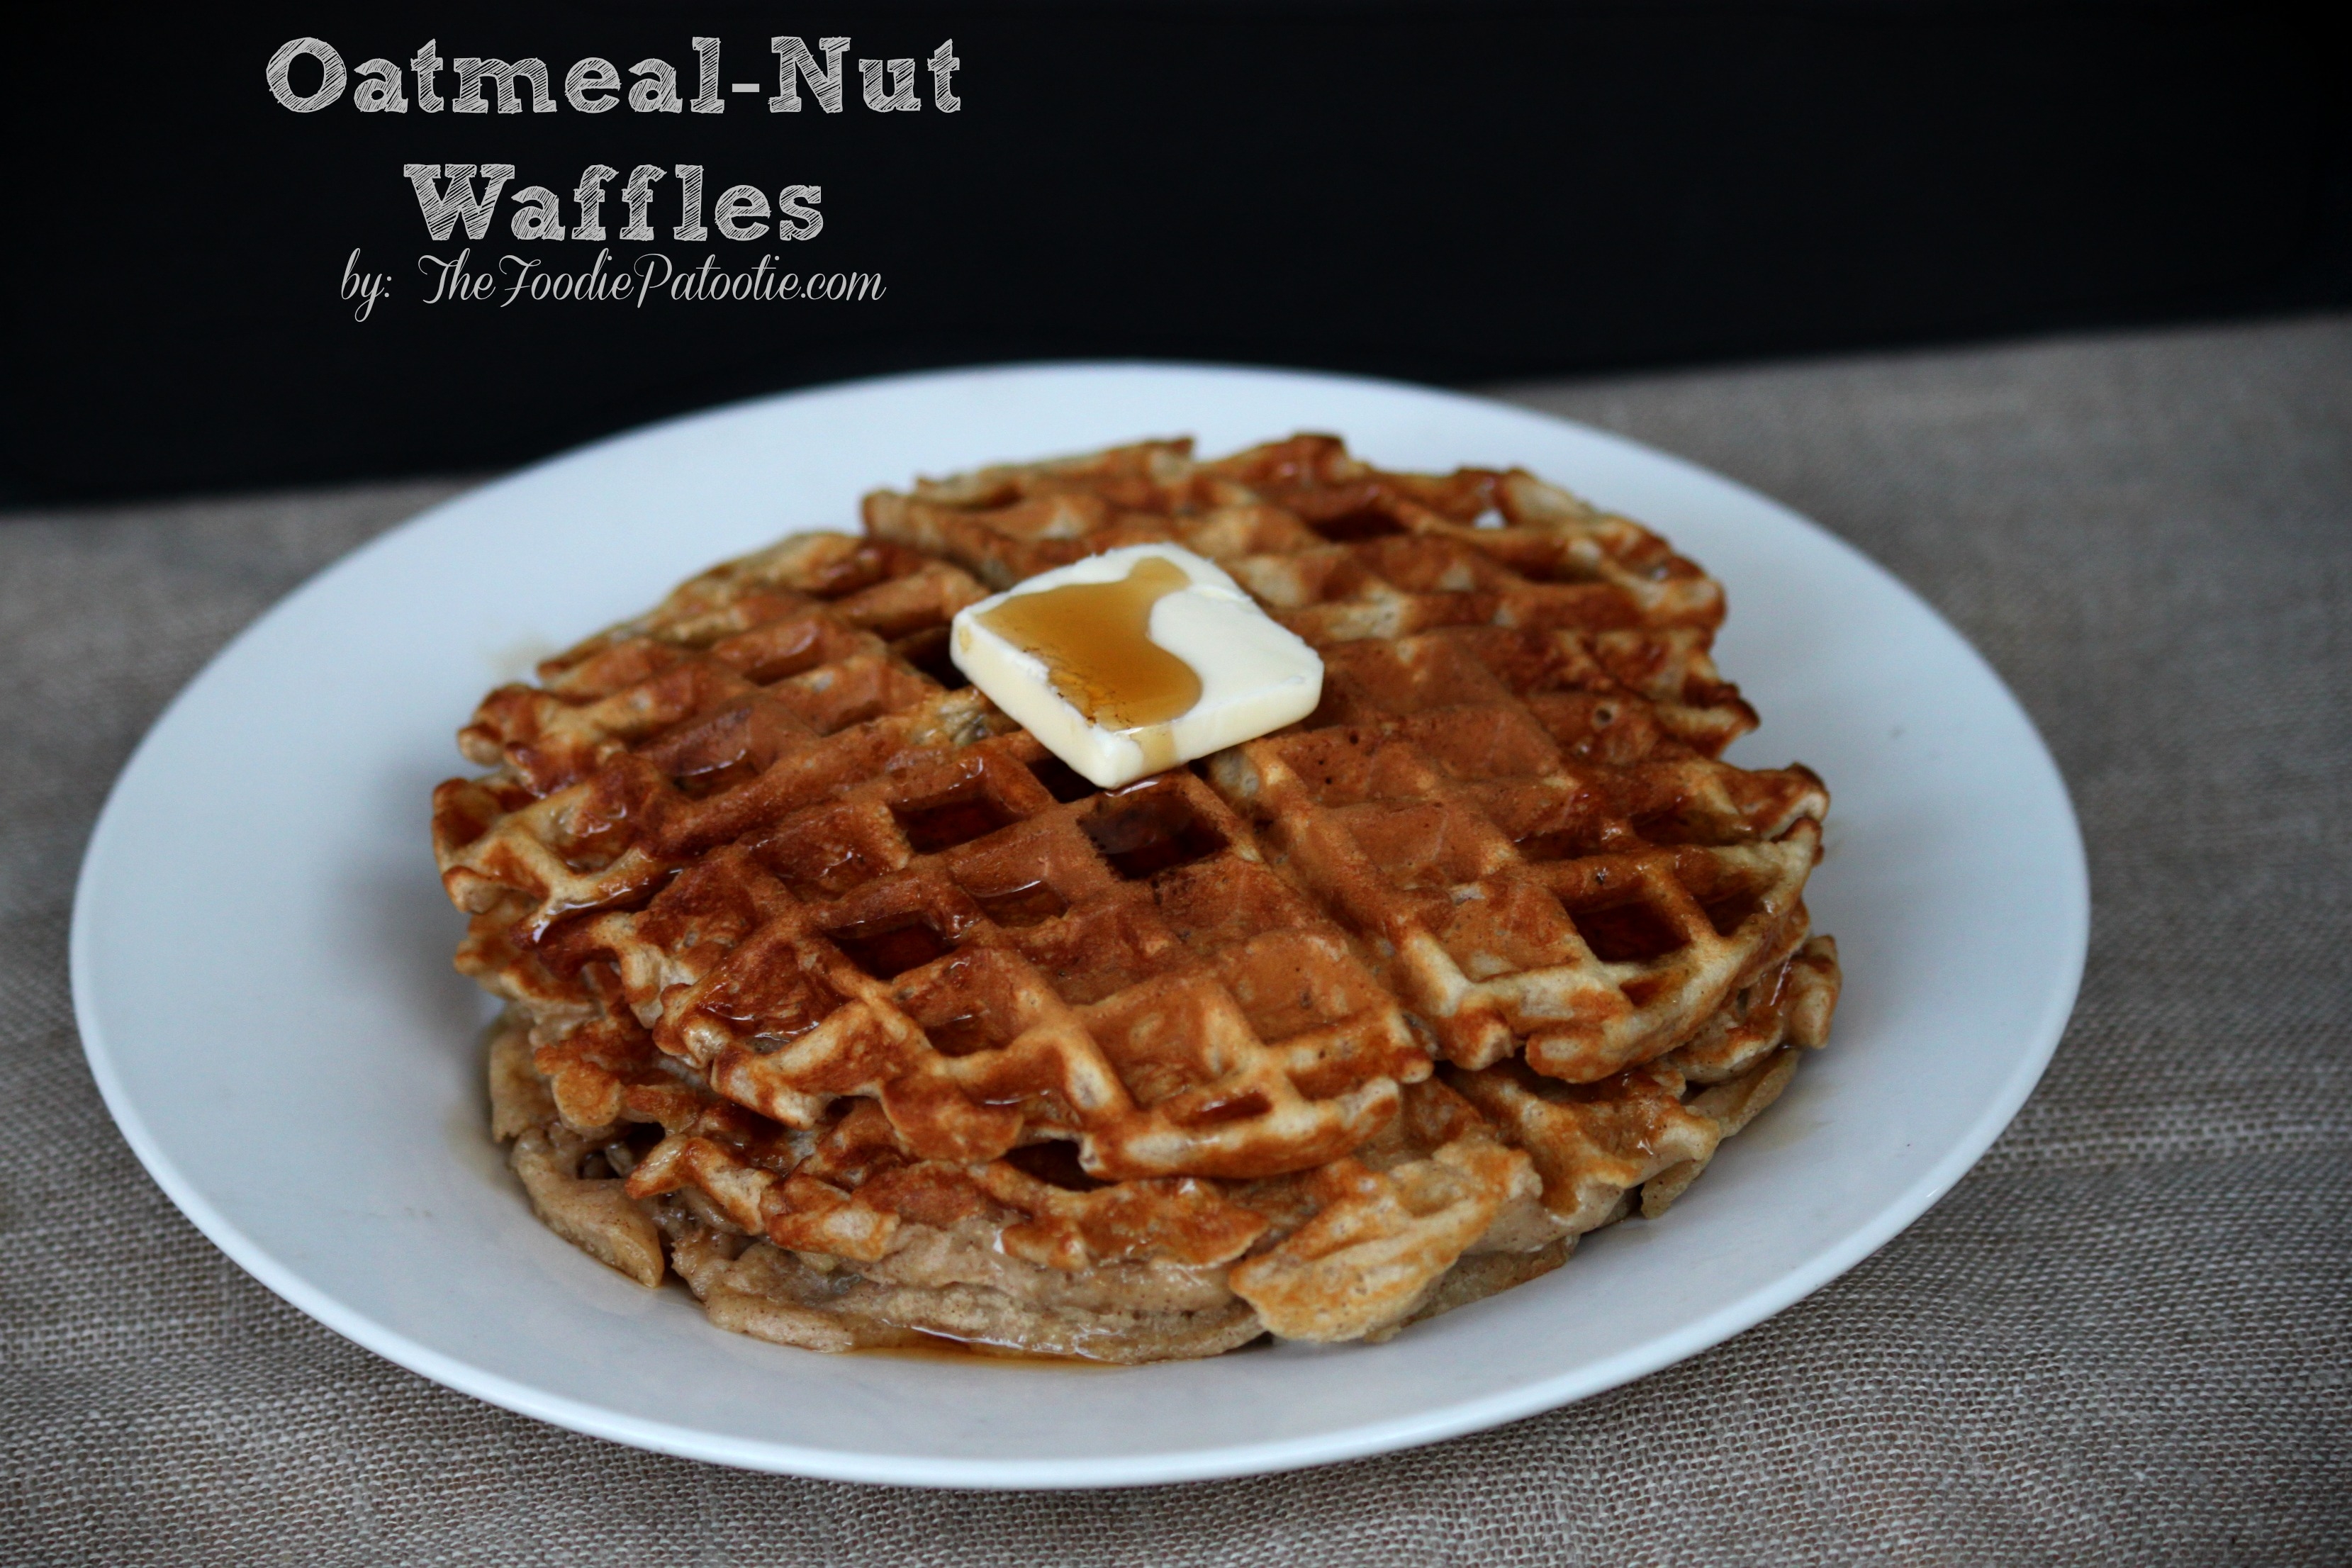 Oatmeal Nut Waffles Day 2019